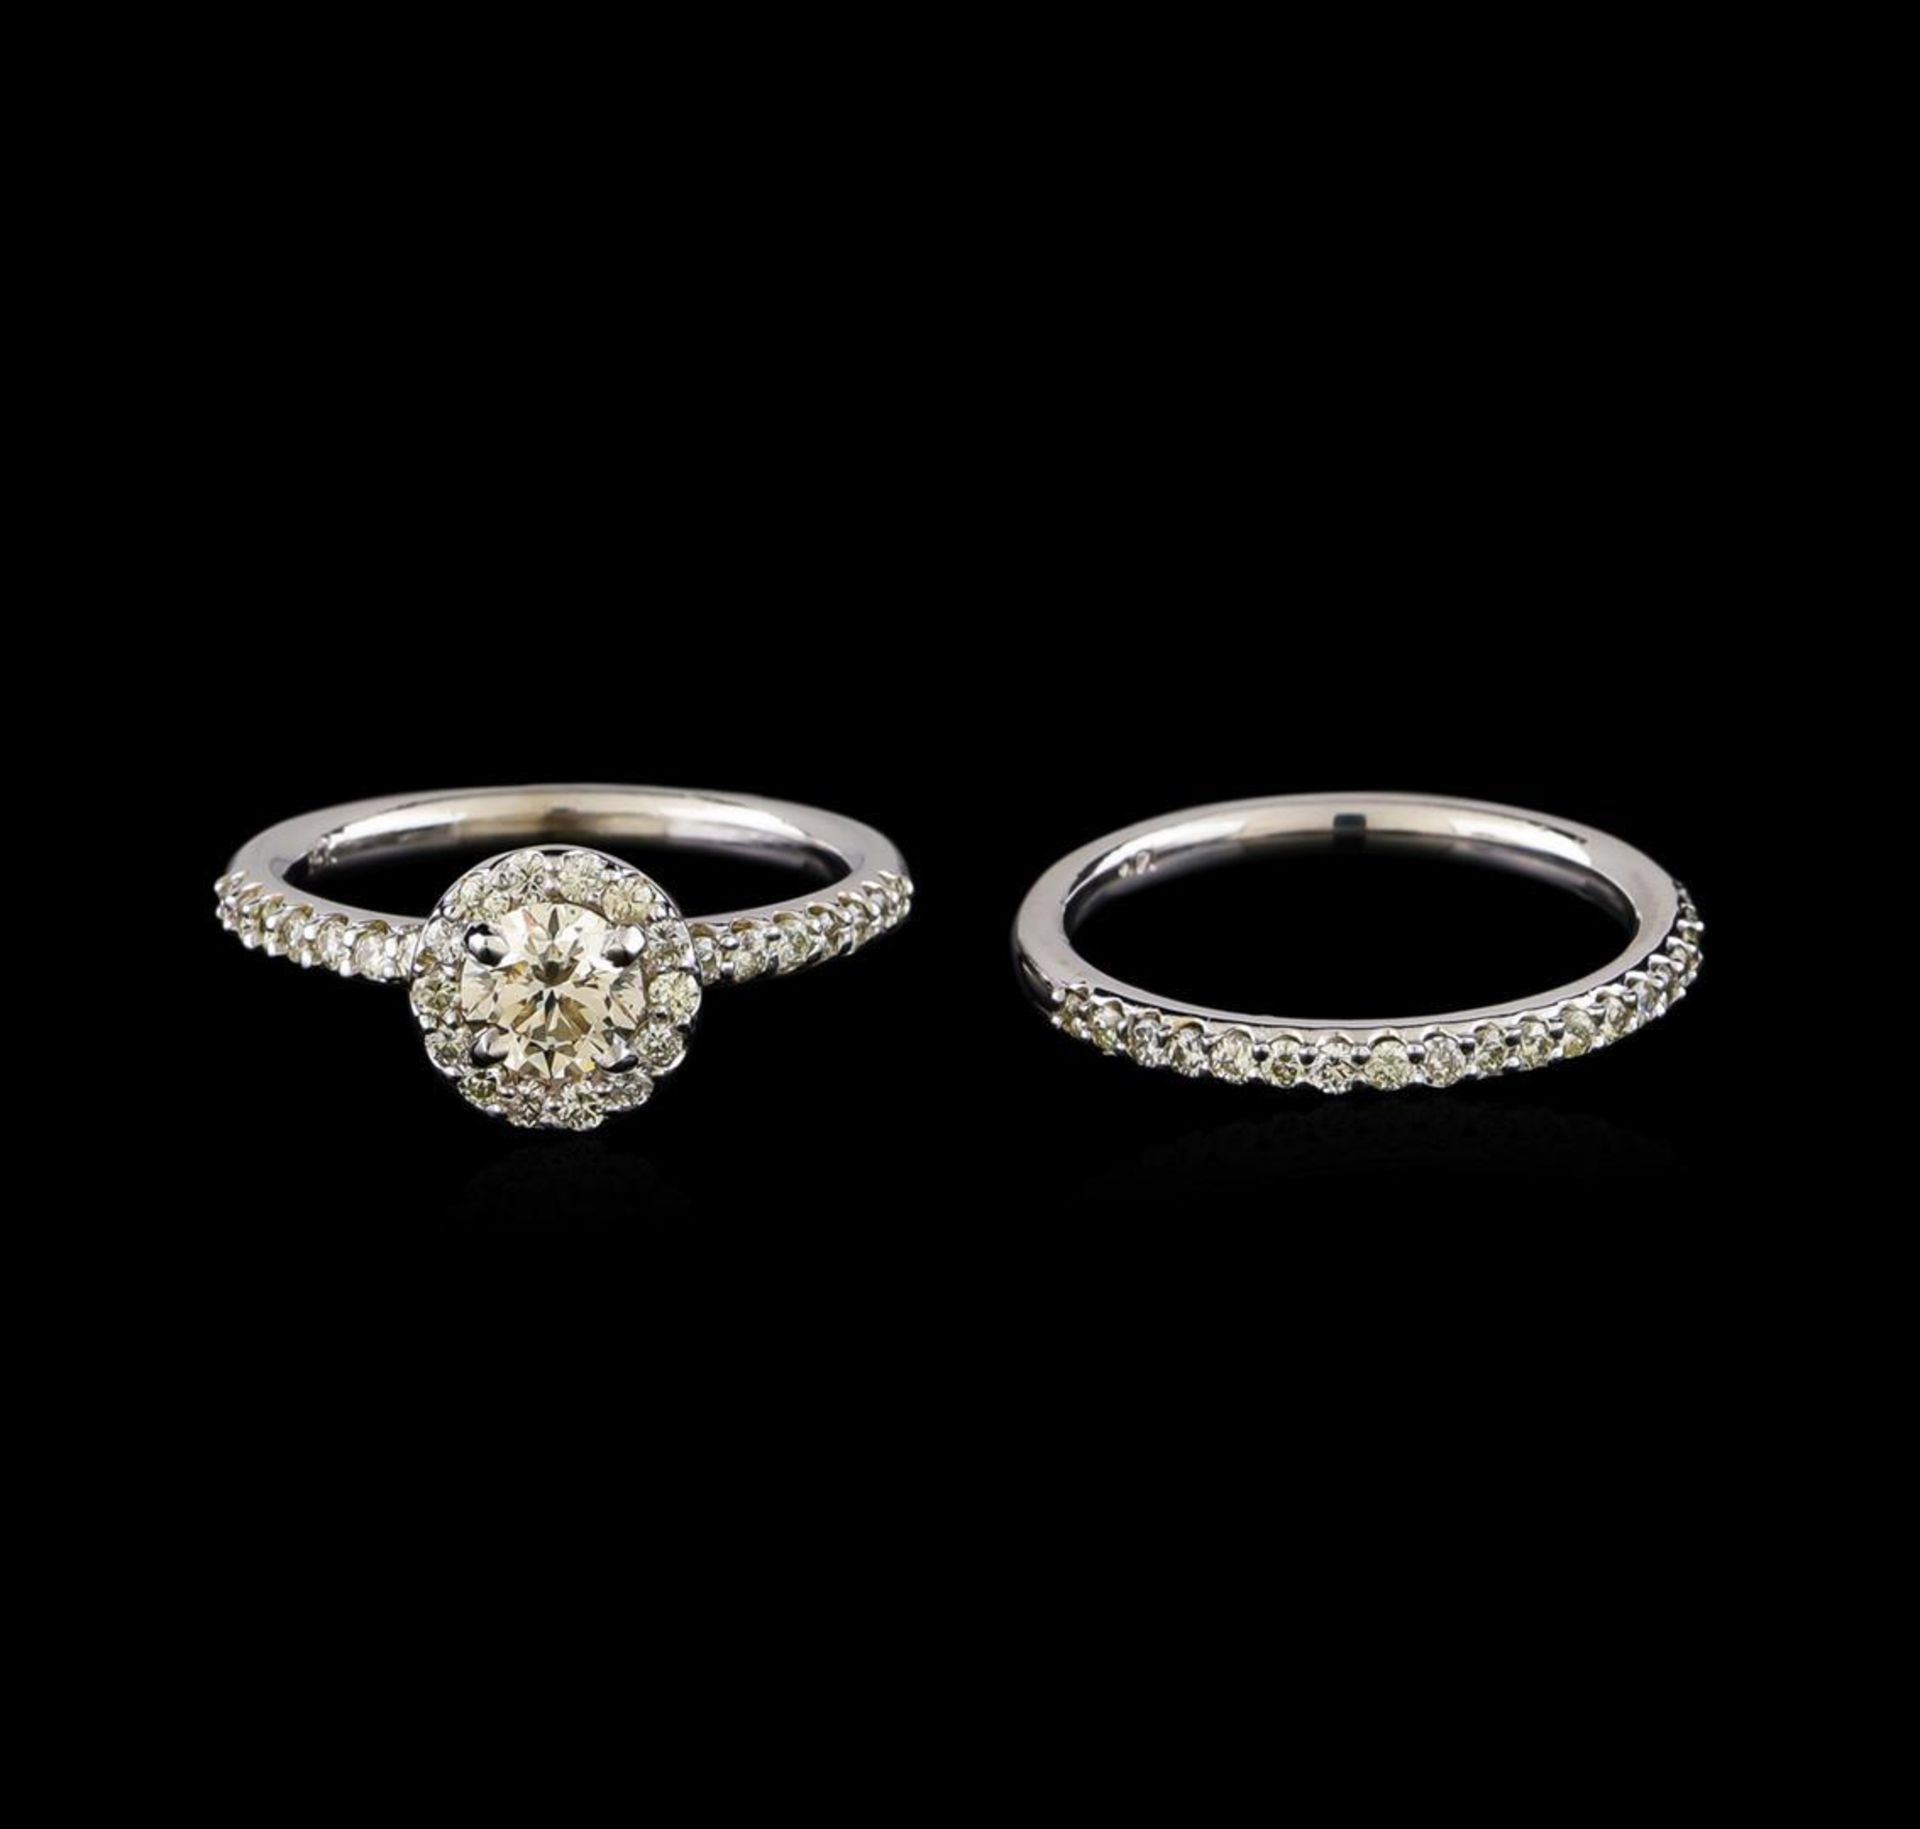 1.17ctw Diamond Wedding Ring Set - 14KT White Gold - Image 2 of 4